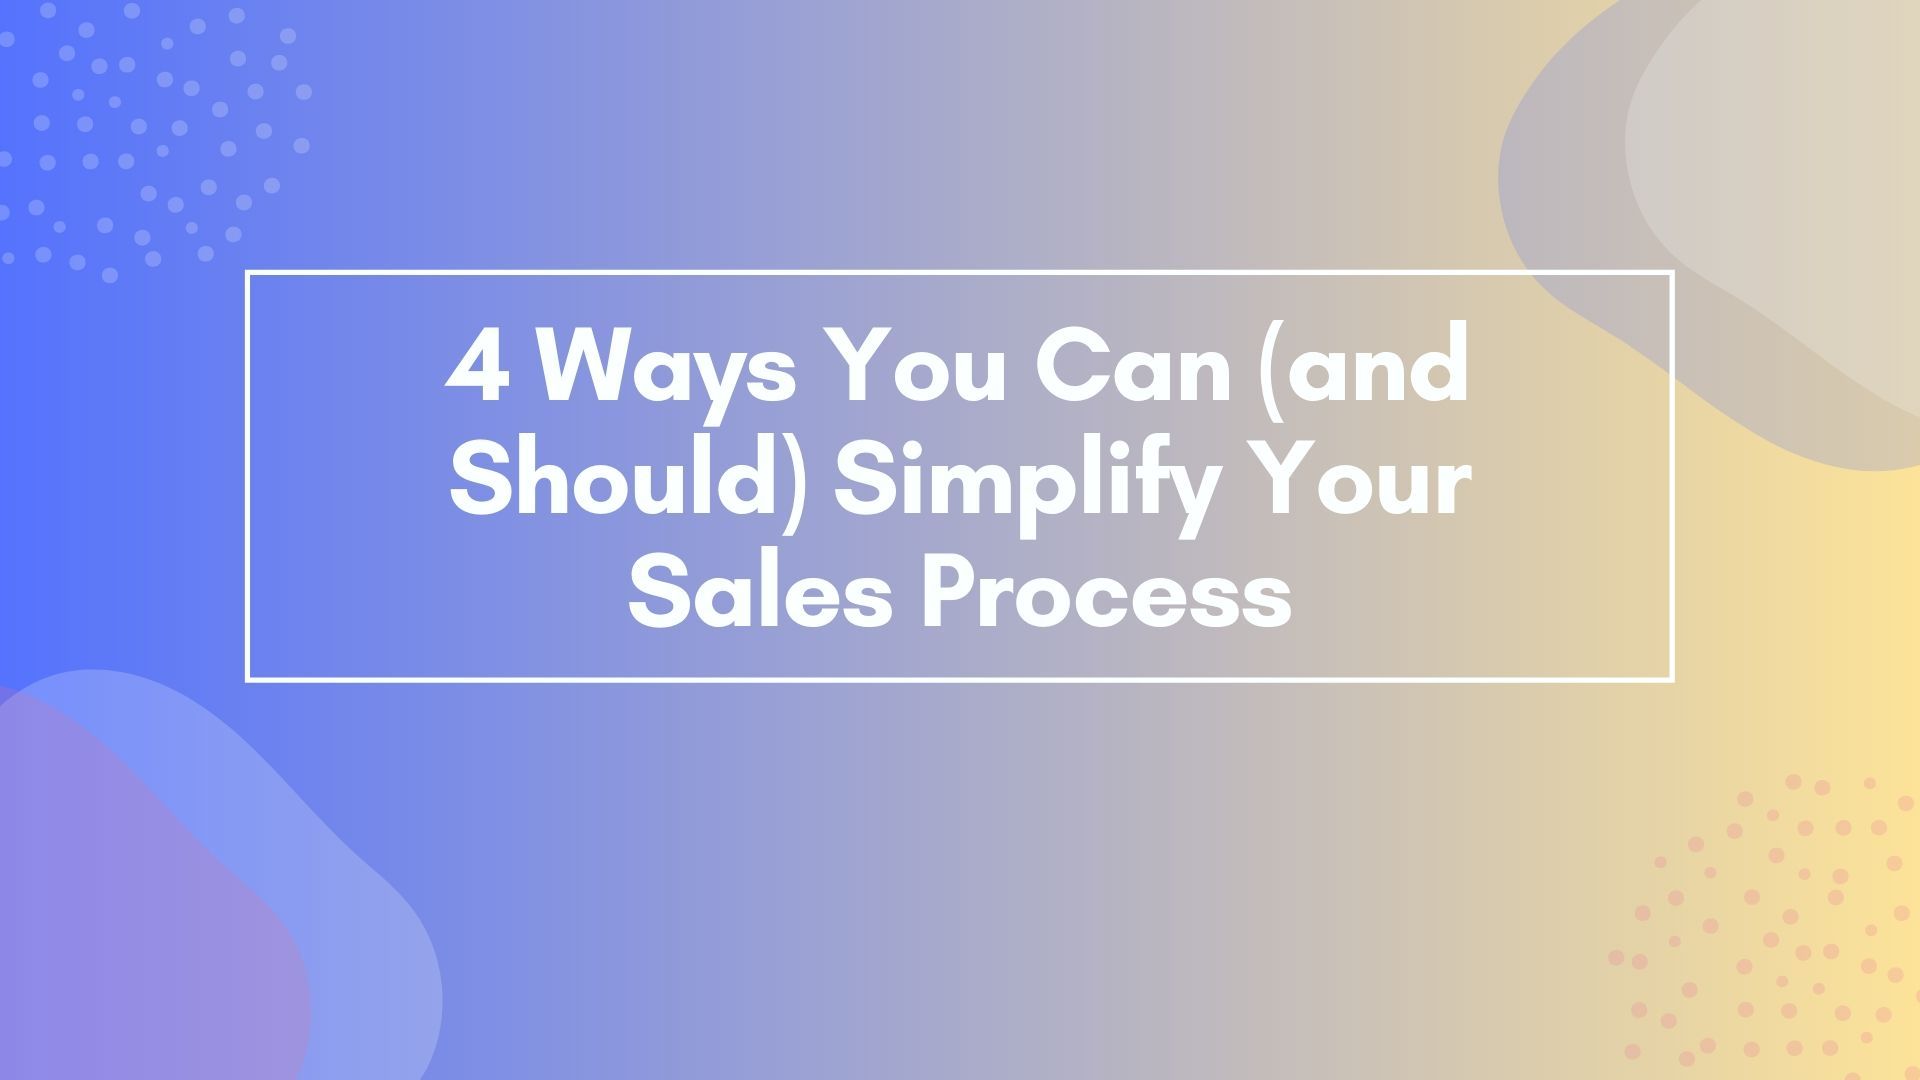 Simplify Your Sales Process